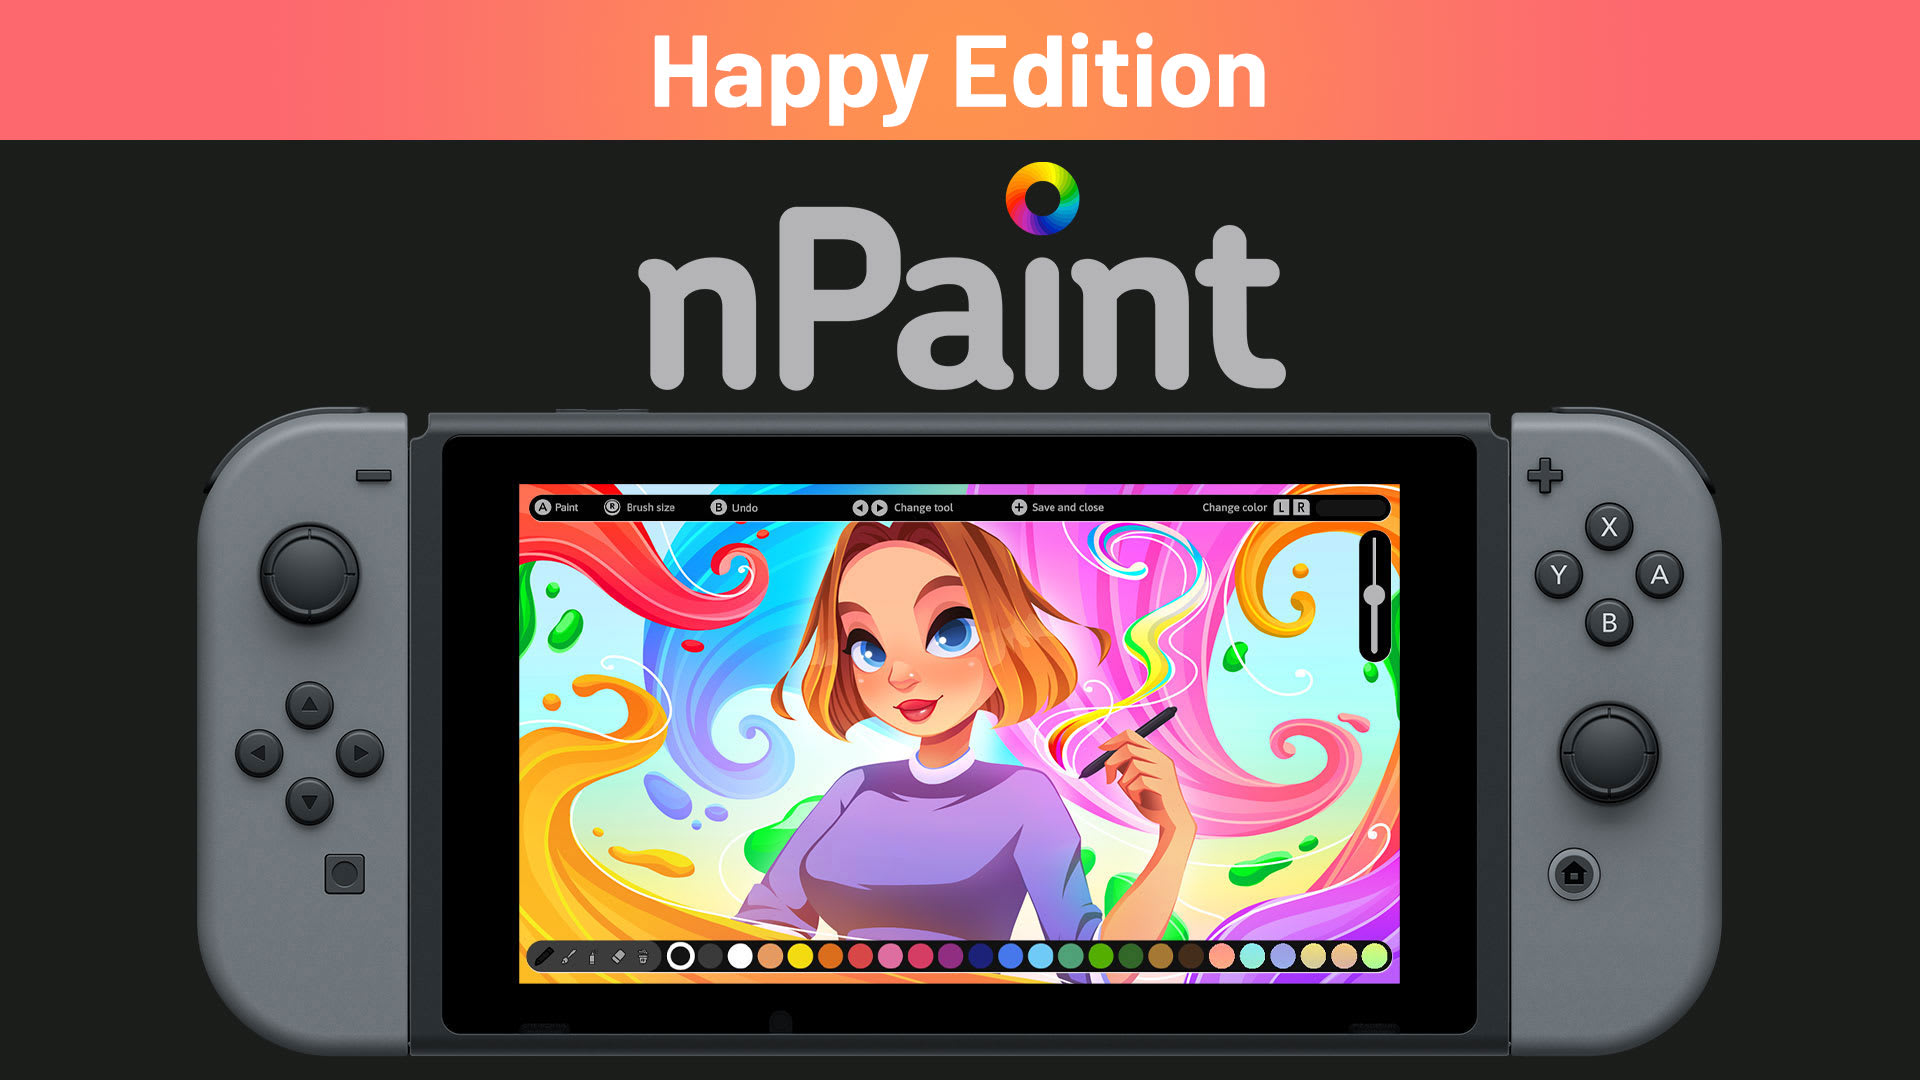 nPaint Happy Edition 1